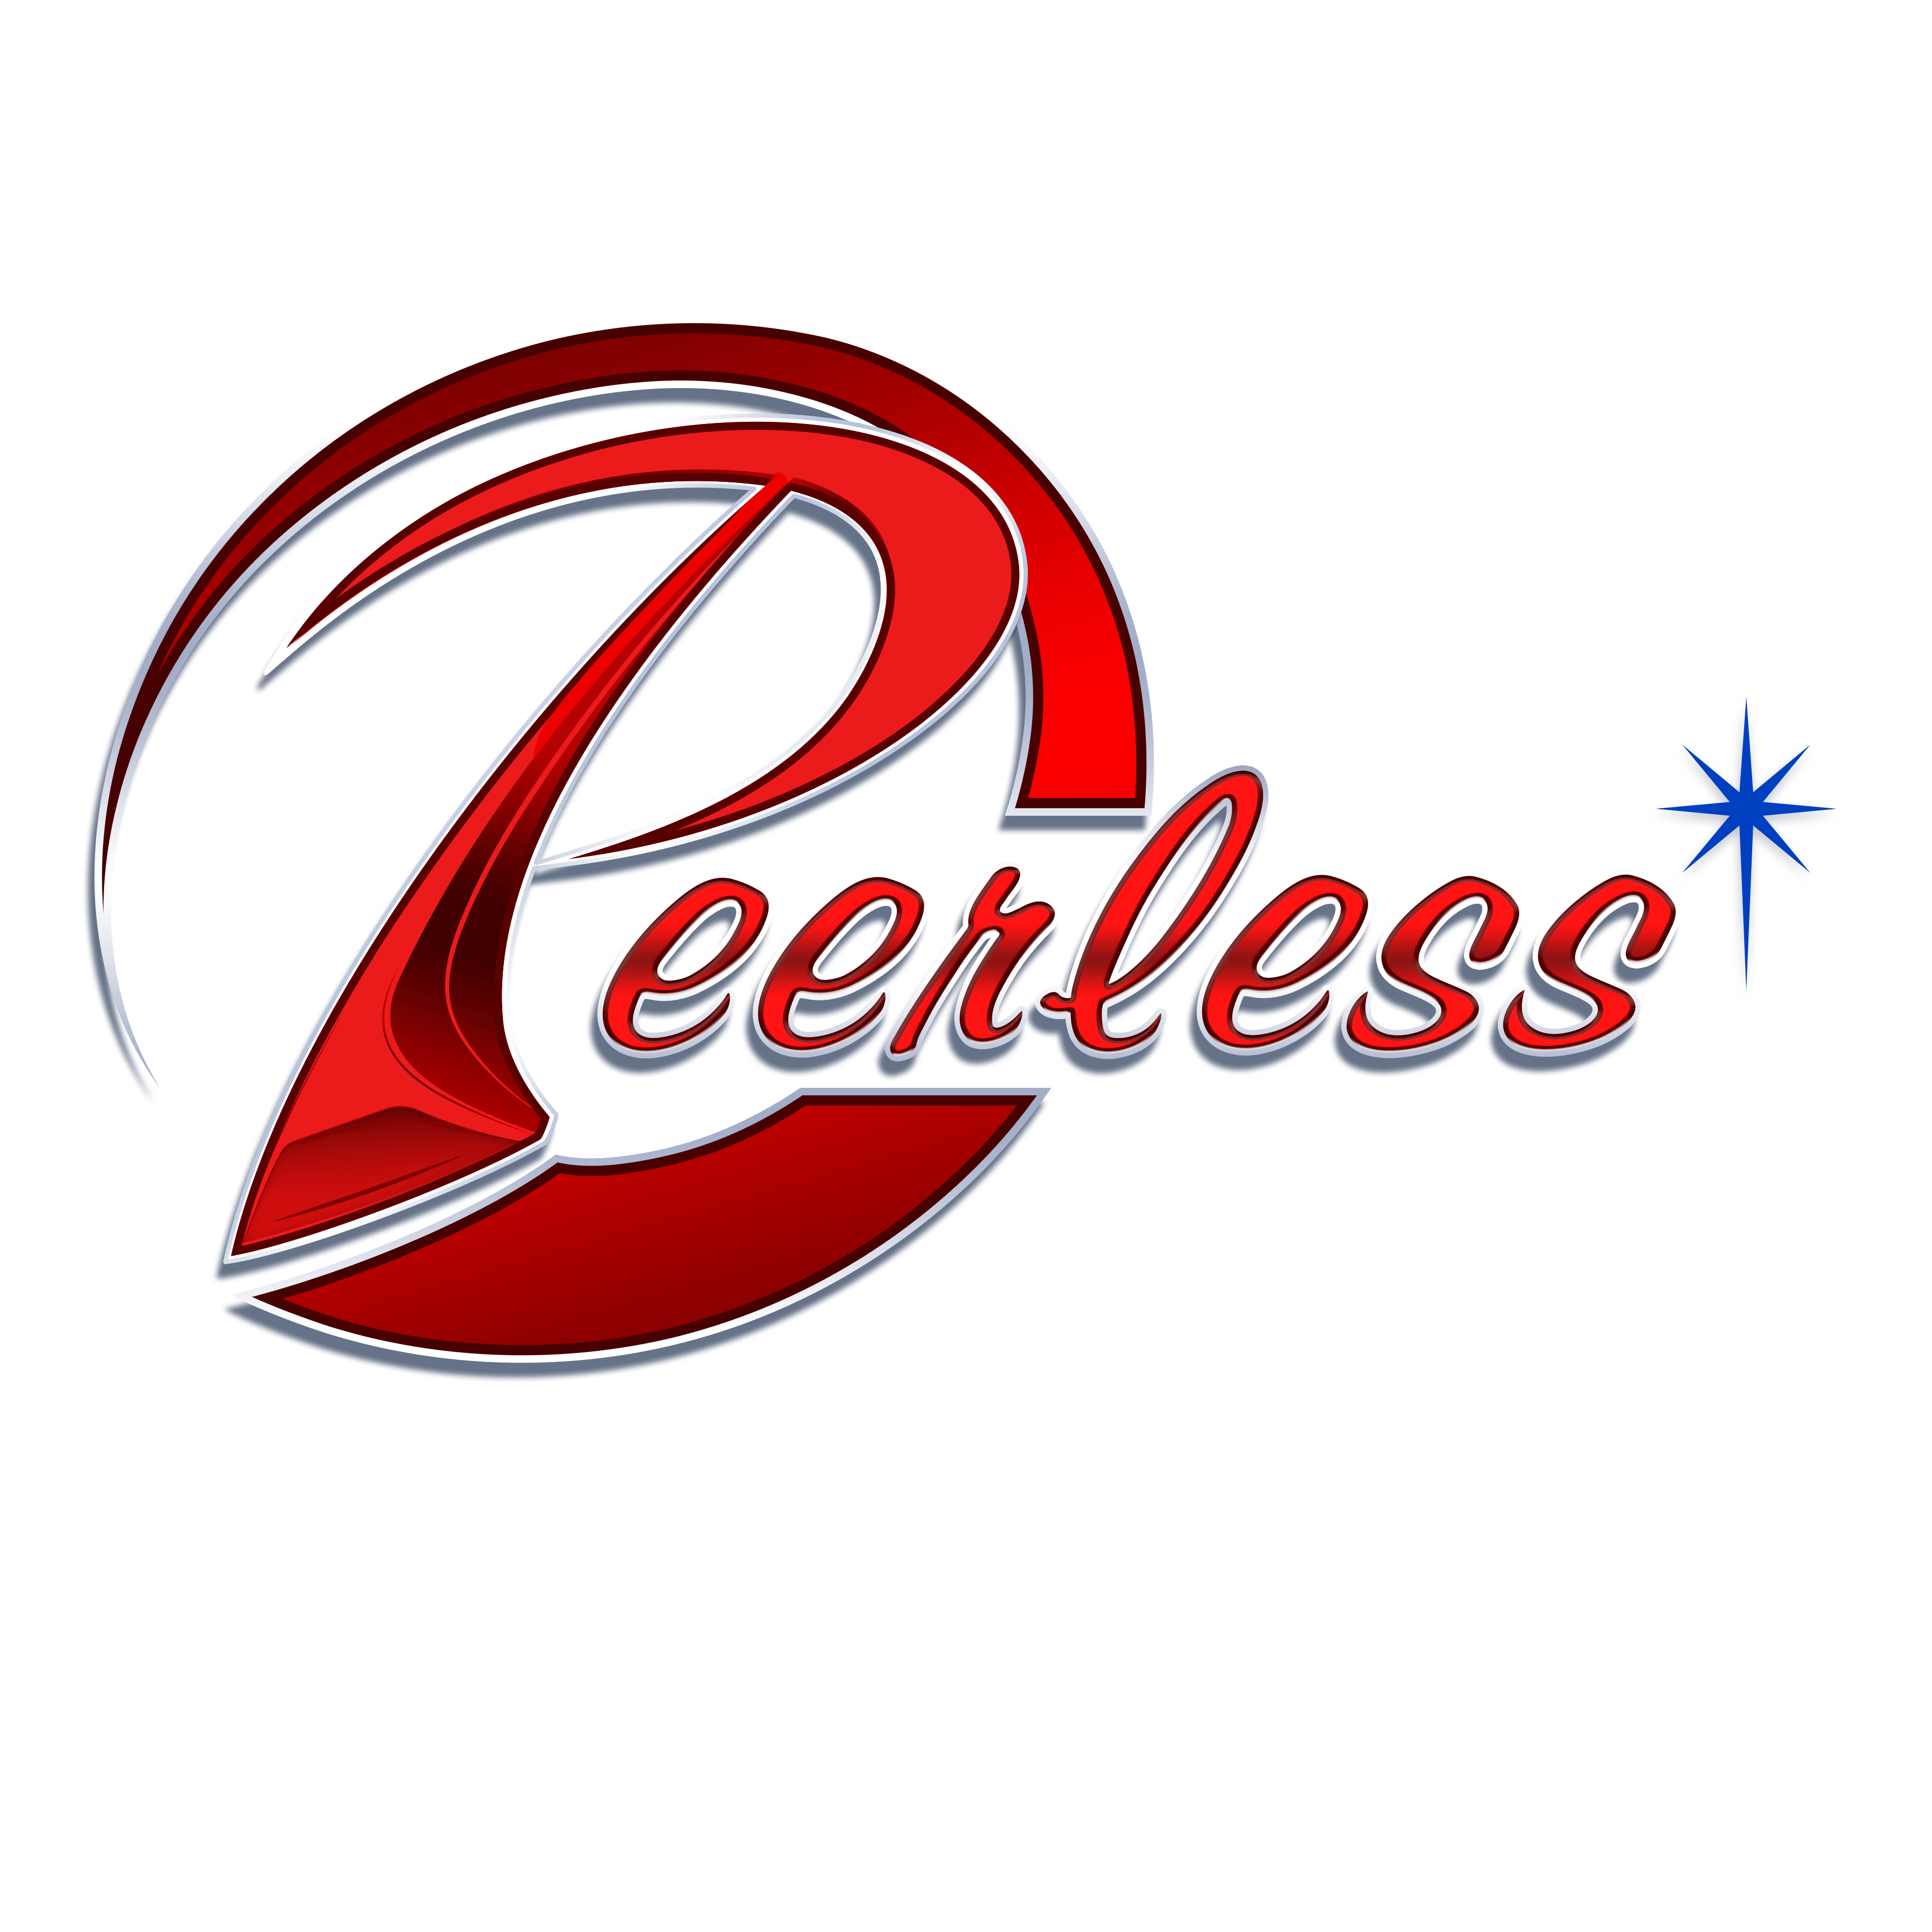 Peerless Logo - PEERLESS LOGO SHADOW. Peerless Carpet Care and Restoration